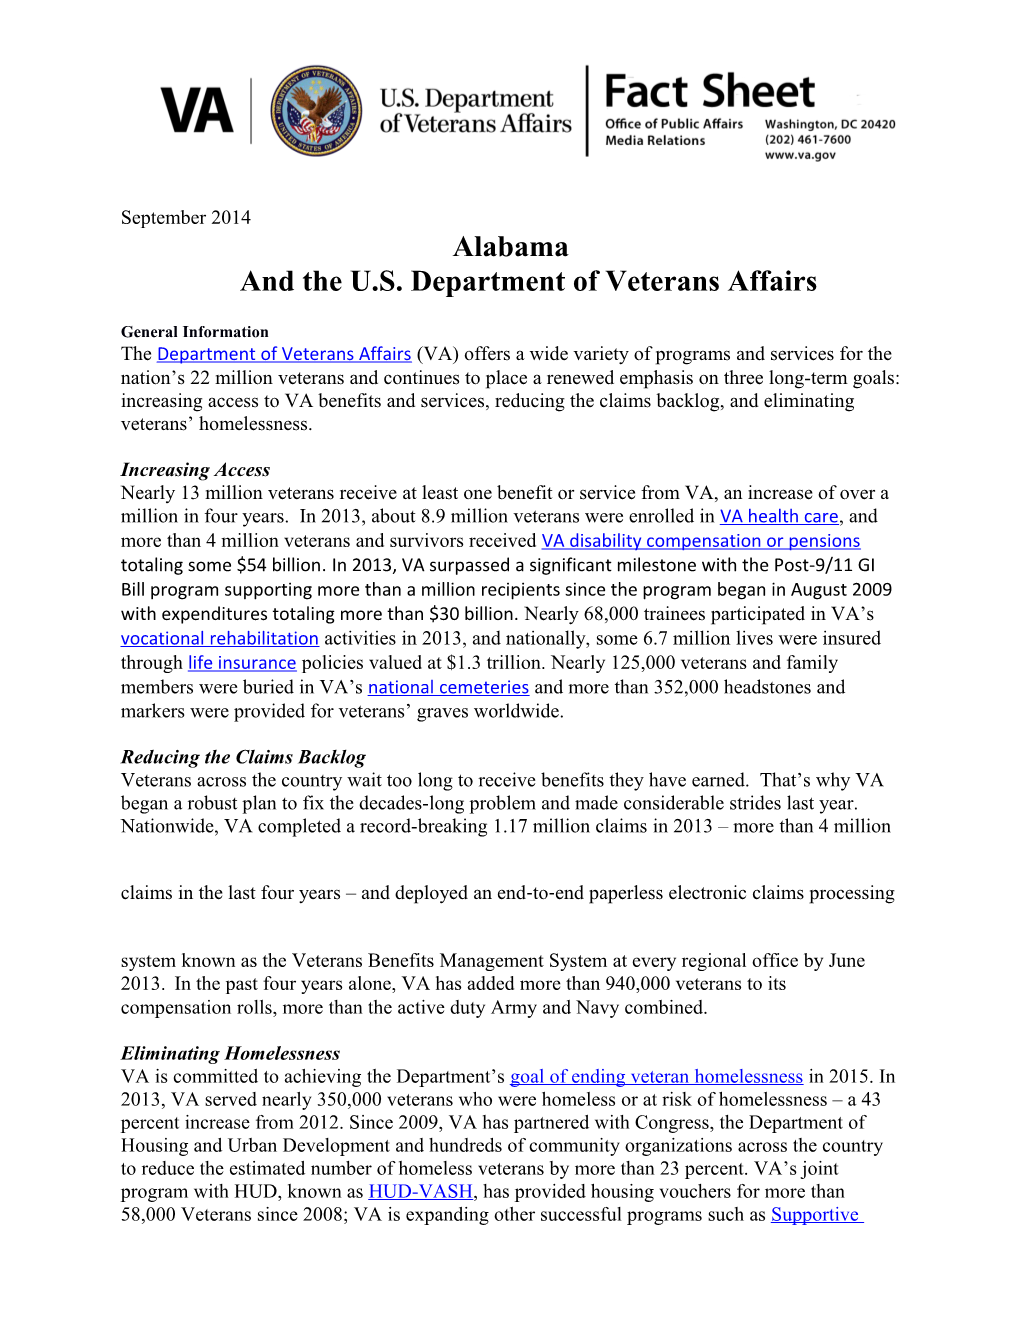 Alabamaand the U.S. Department of Veterans Affairs